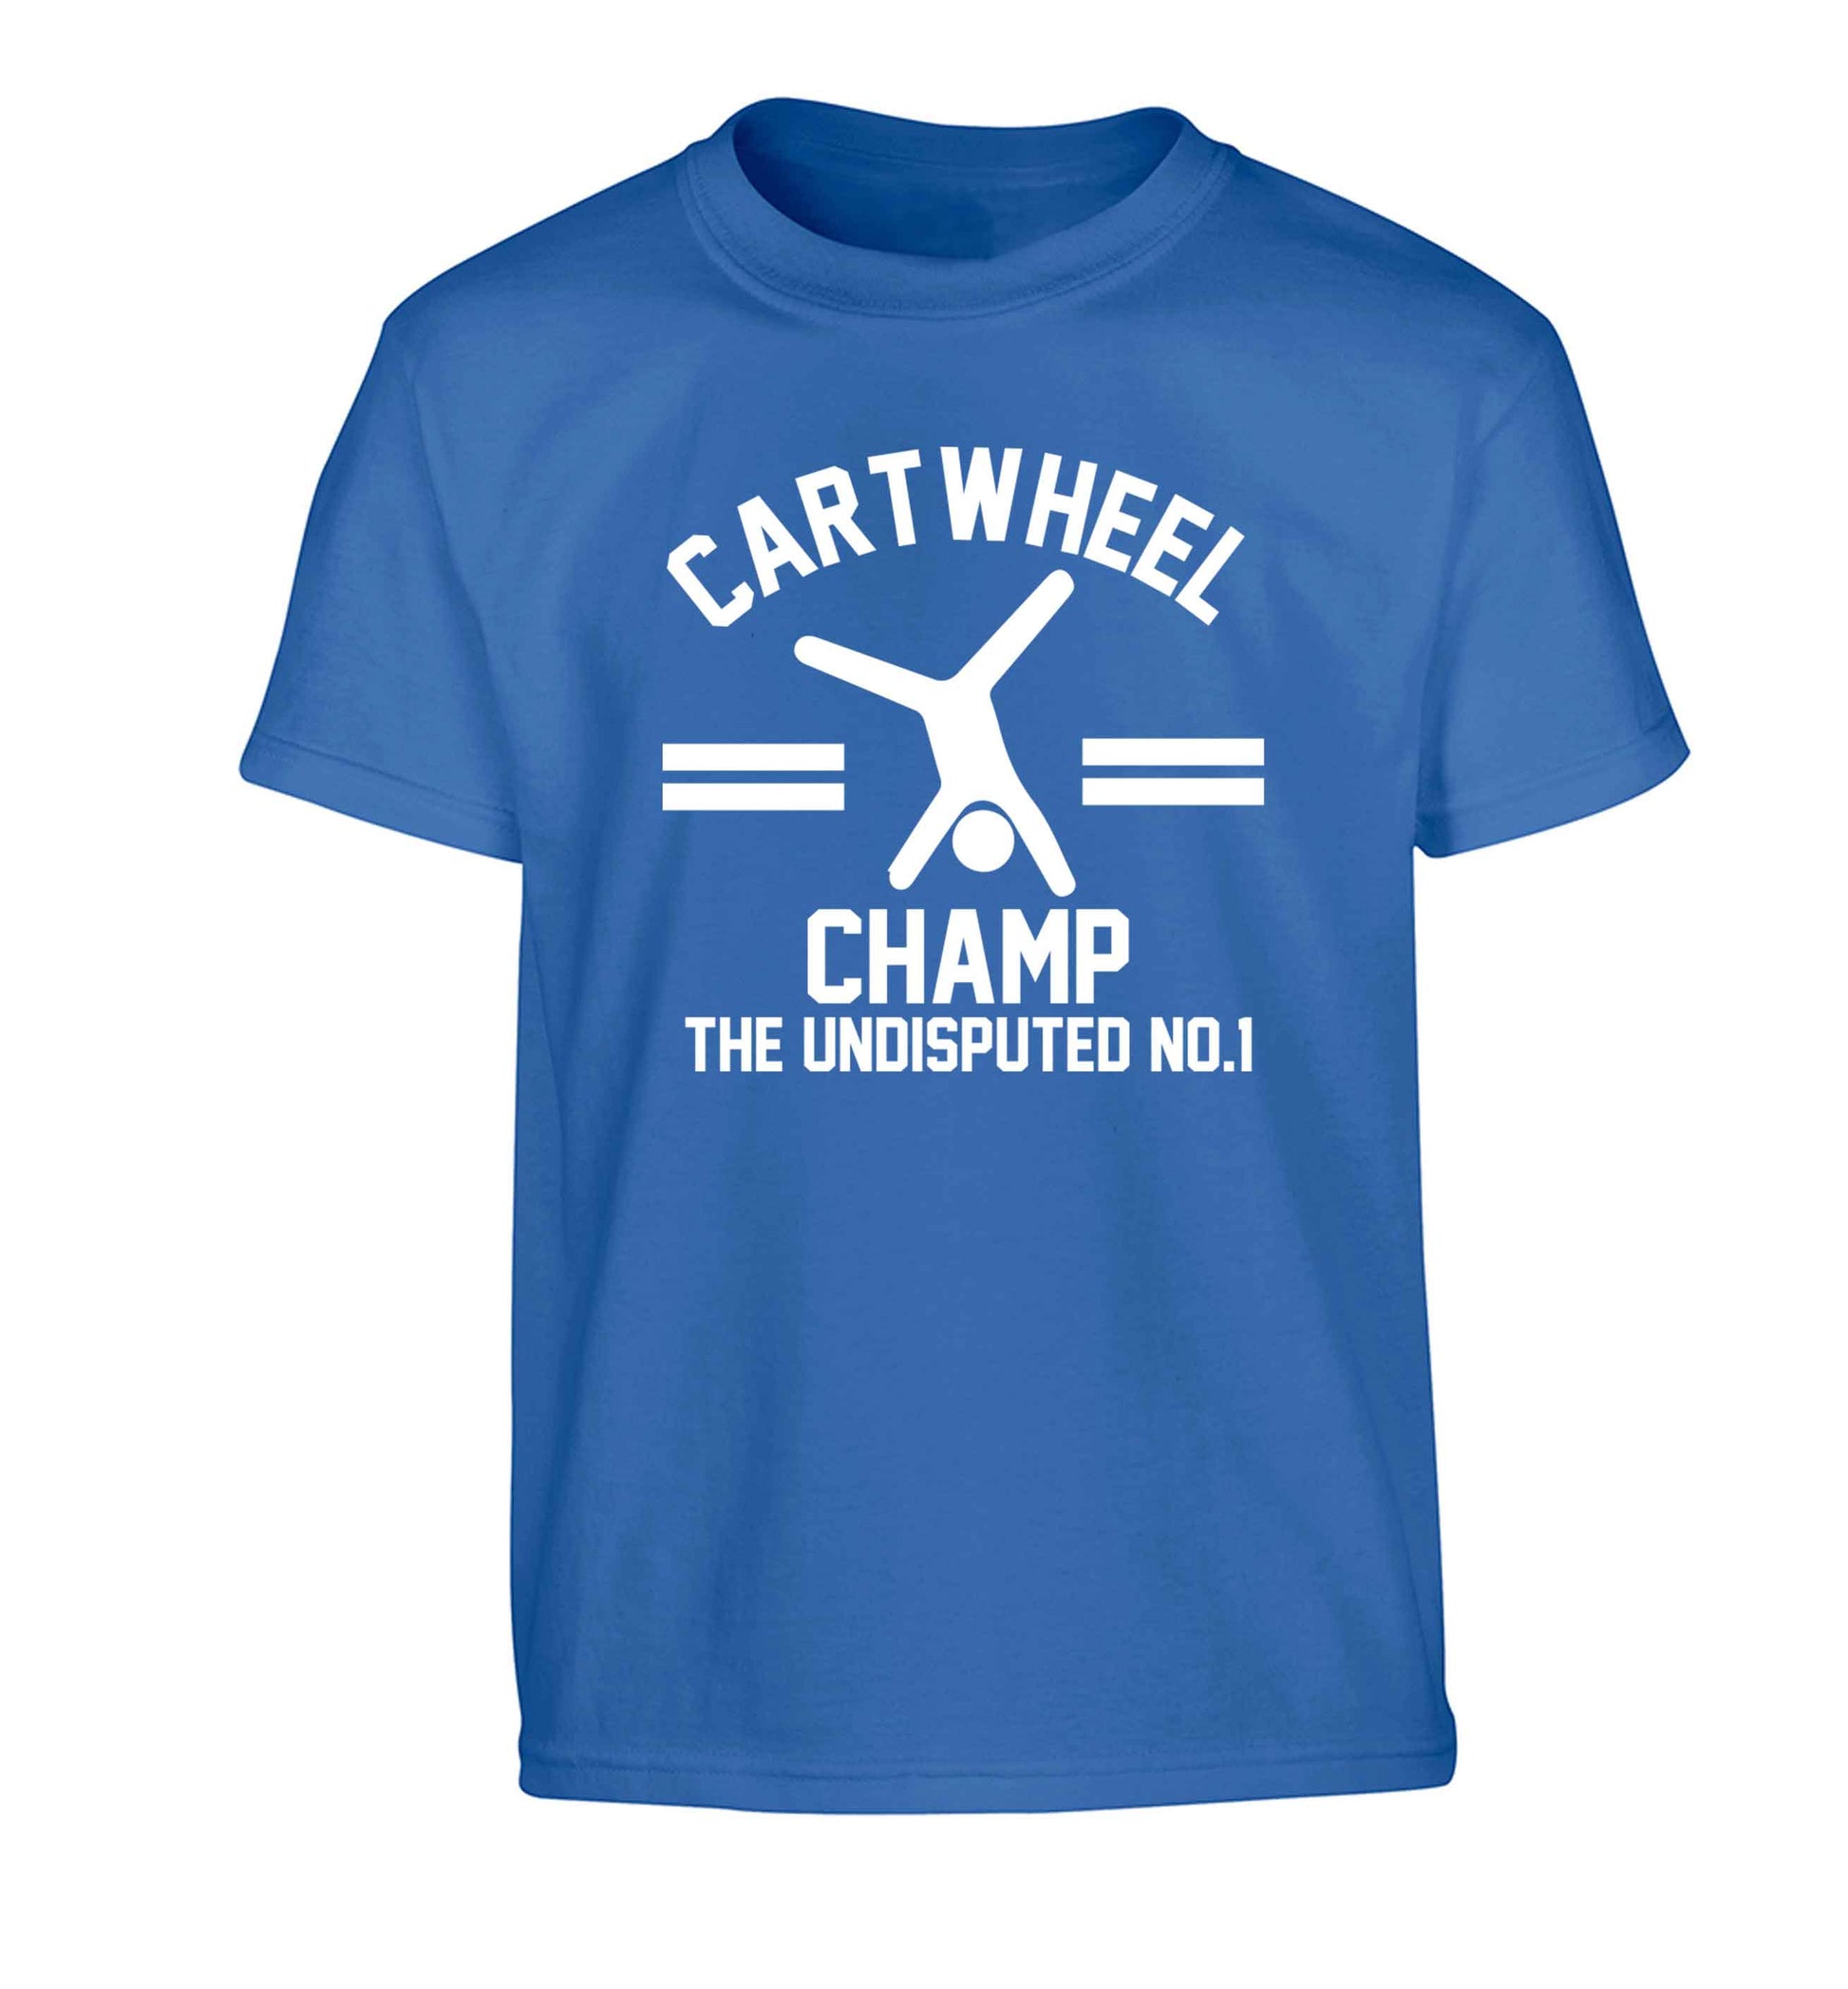 Undisputed cartwheel championship no.1  Children's blue Tshirt 12-13 Years